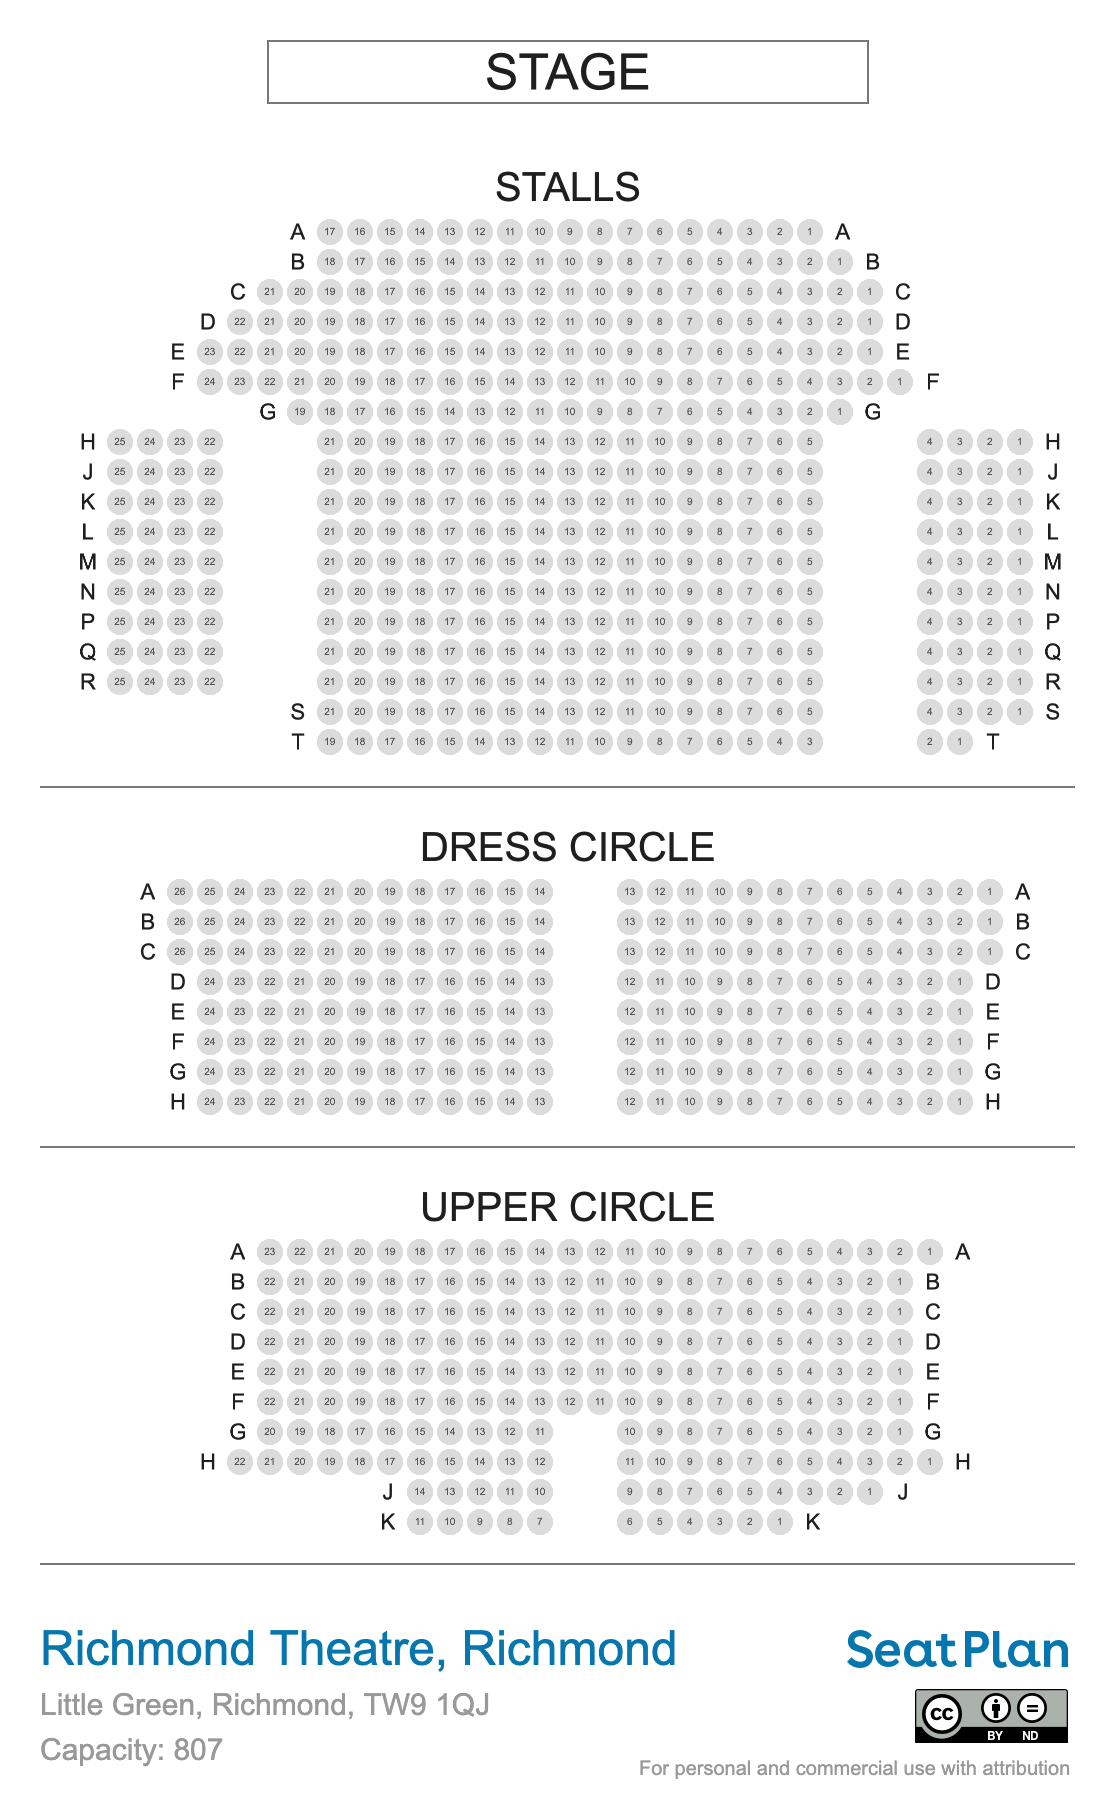 Richmond Theatre Seating Plan